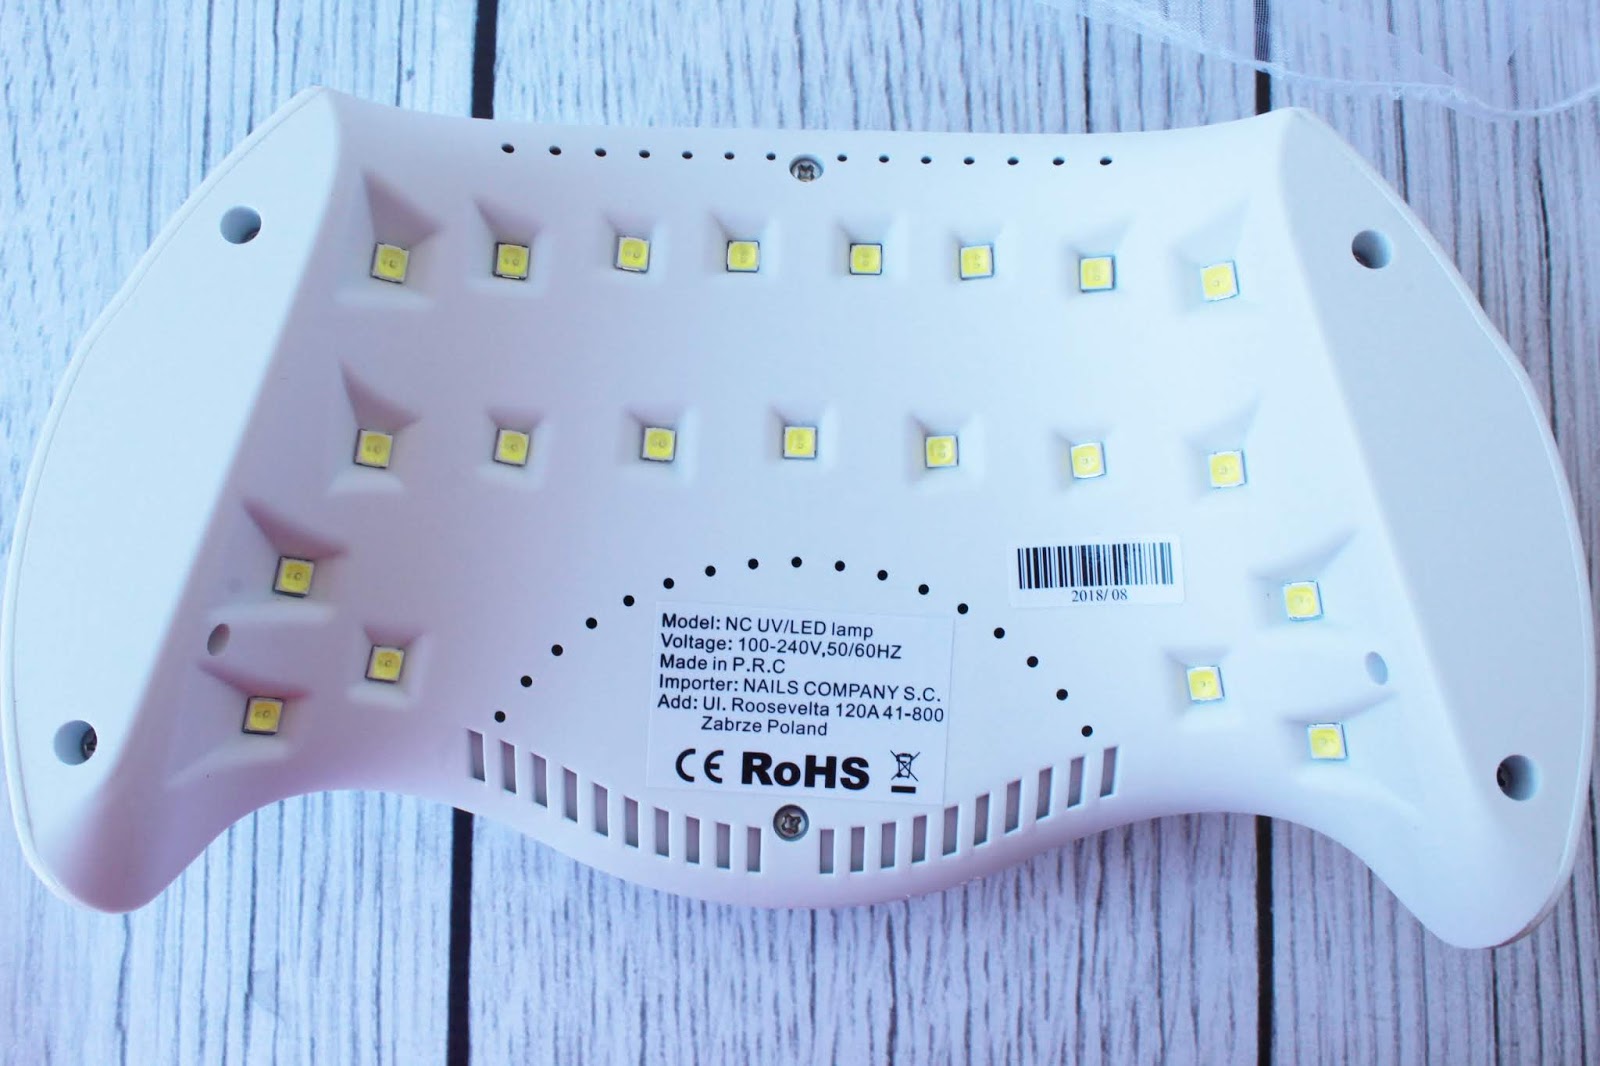 NC Nails Company - Lampa UV/LED 40 W.